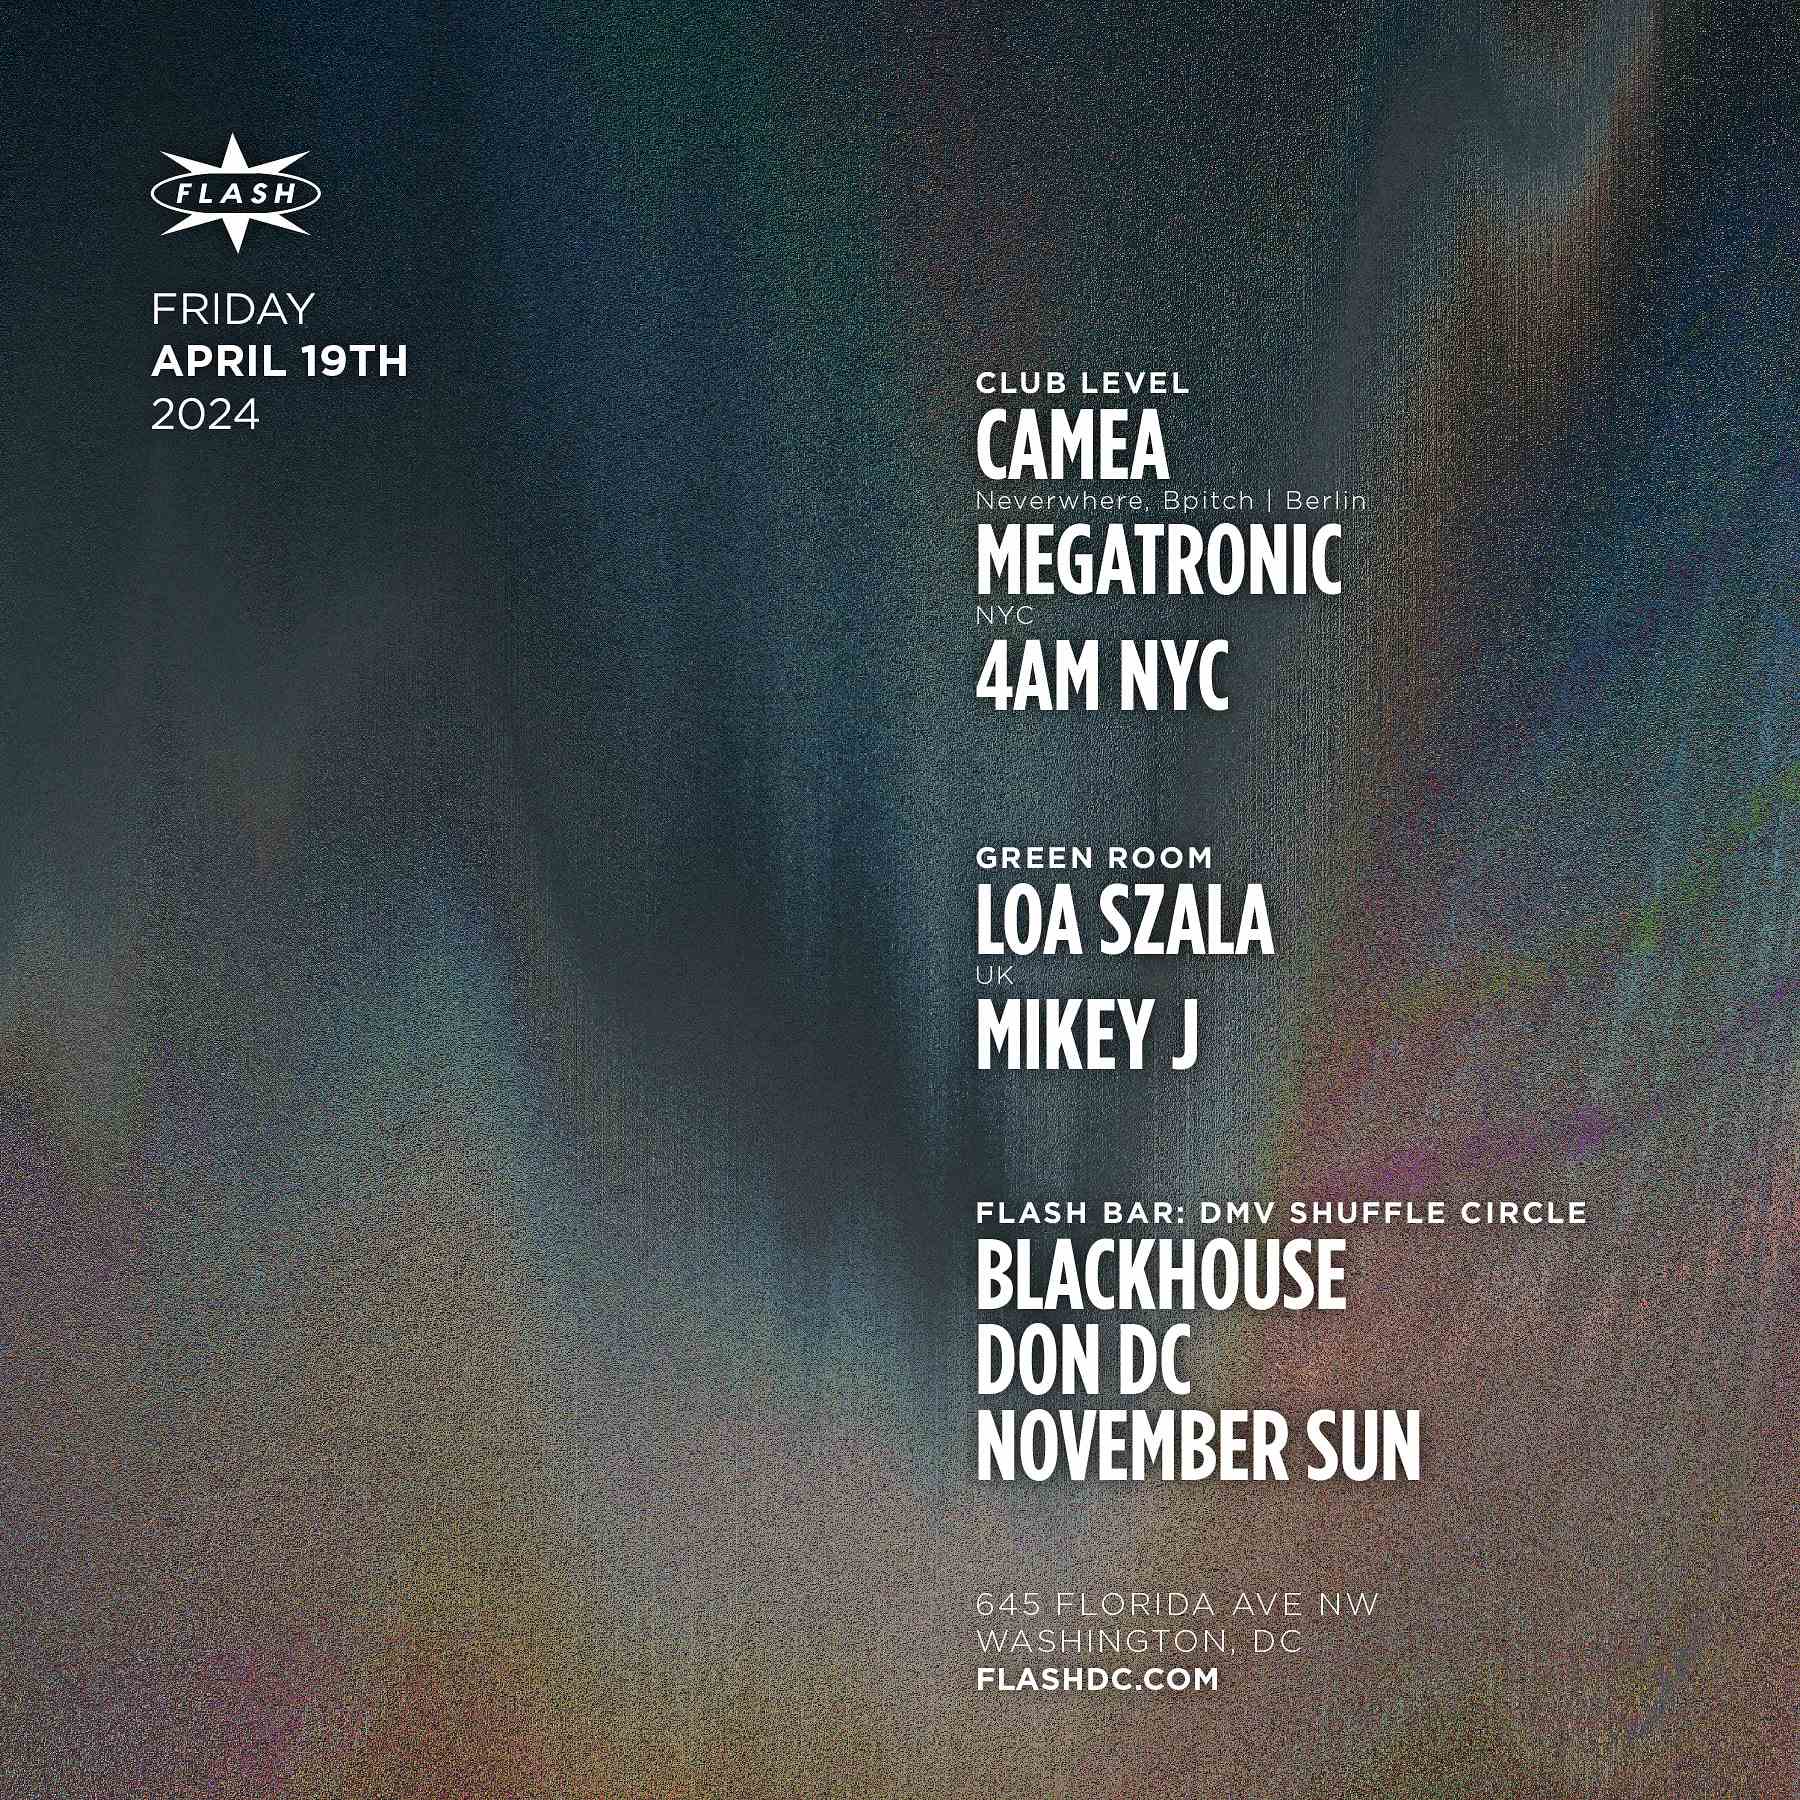 Camea - Megatronic - 4AM NYC event flyer